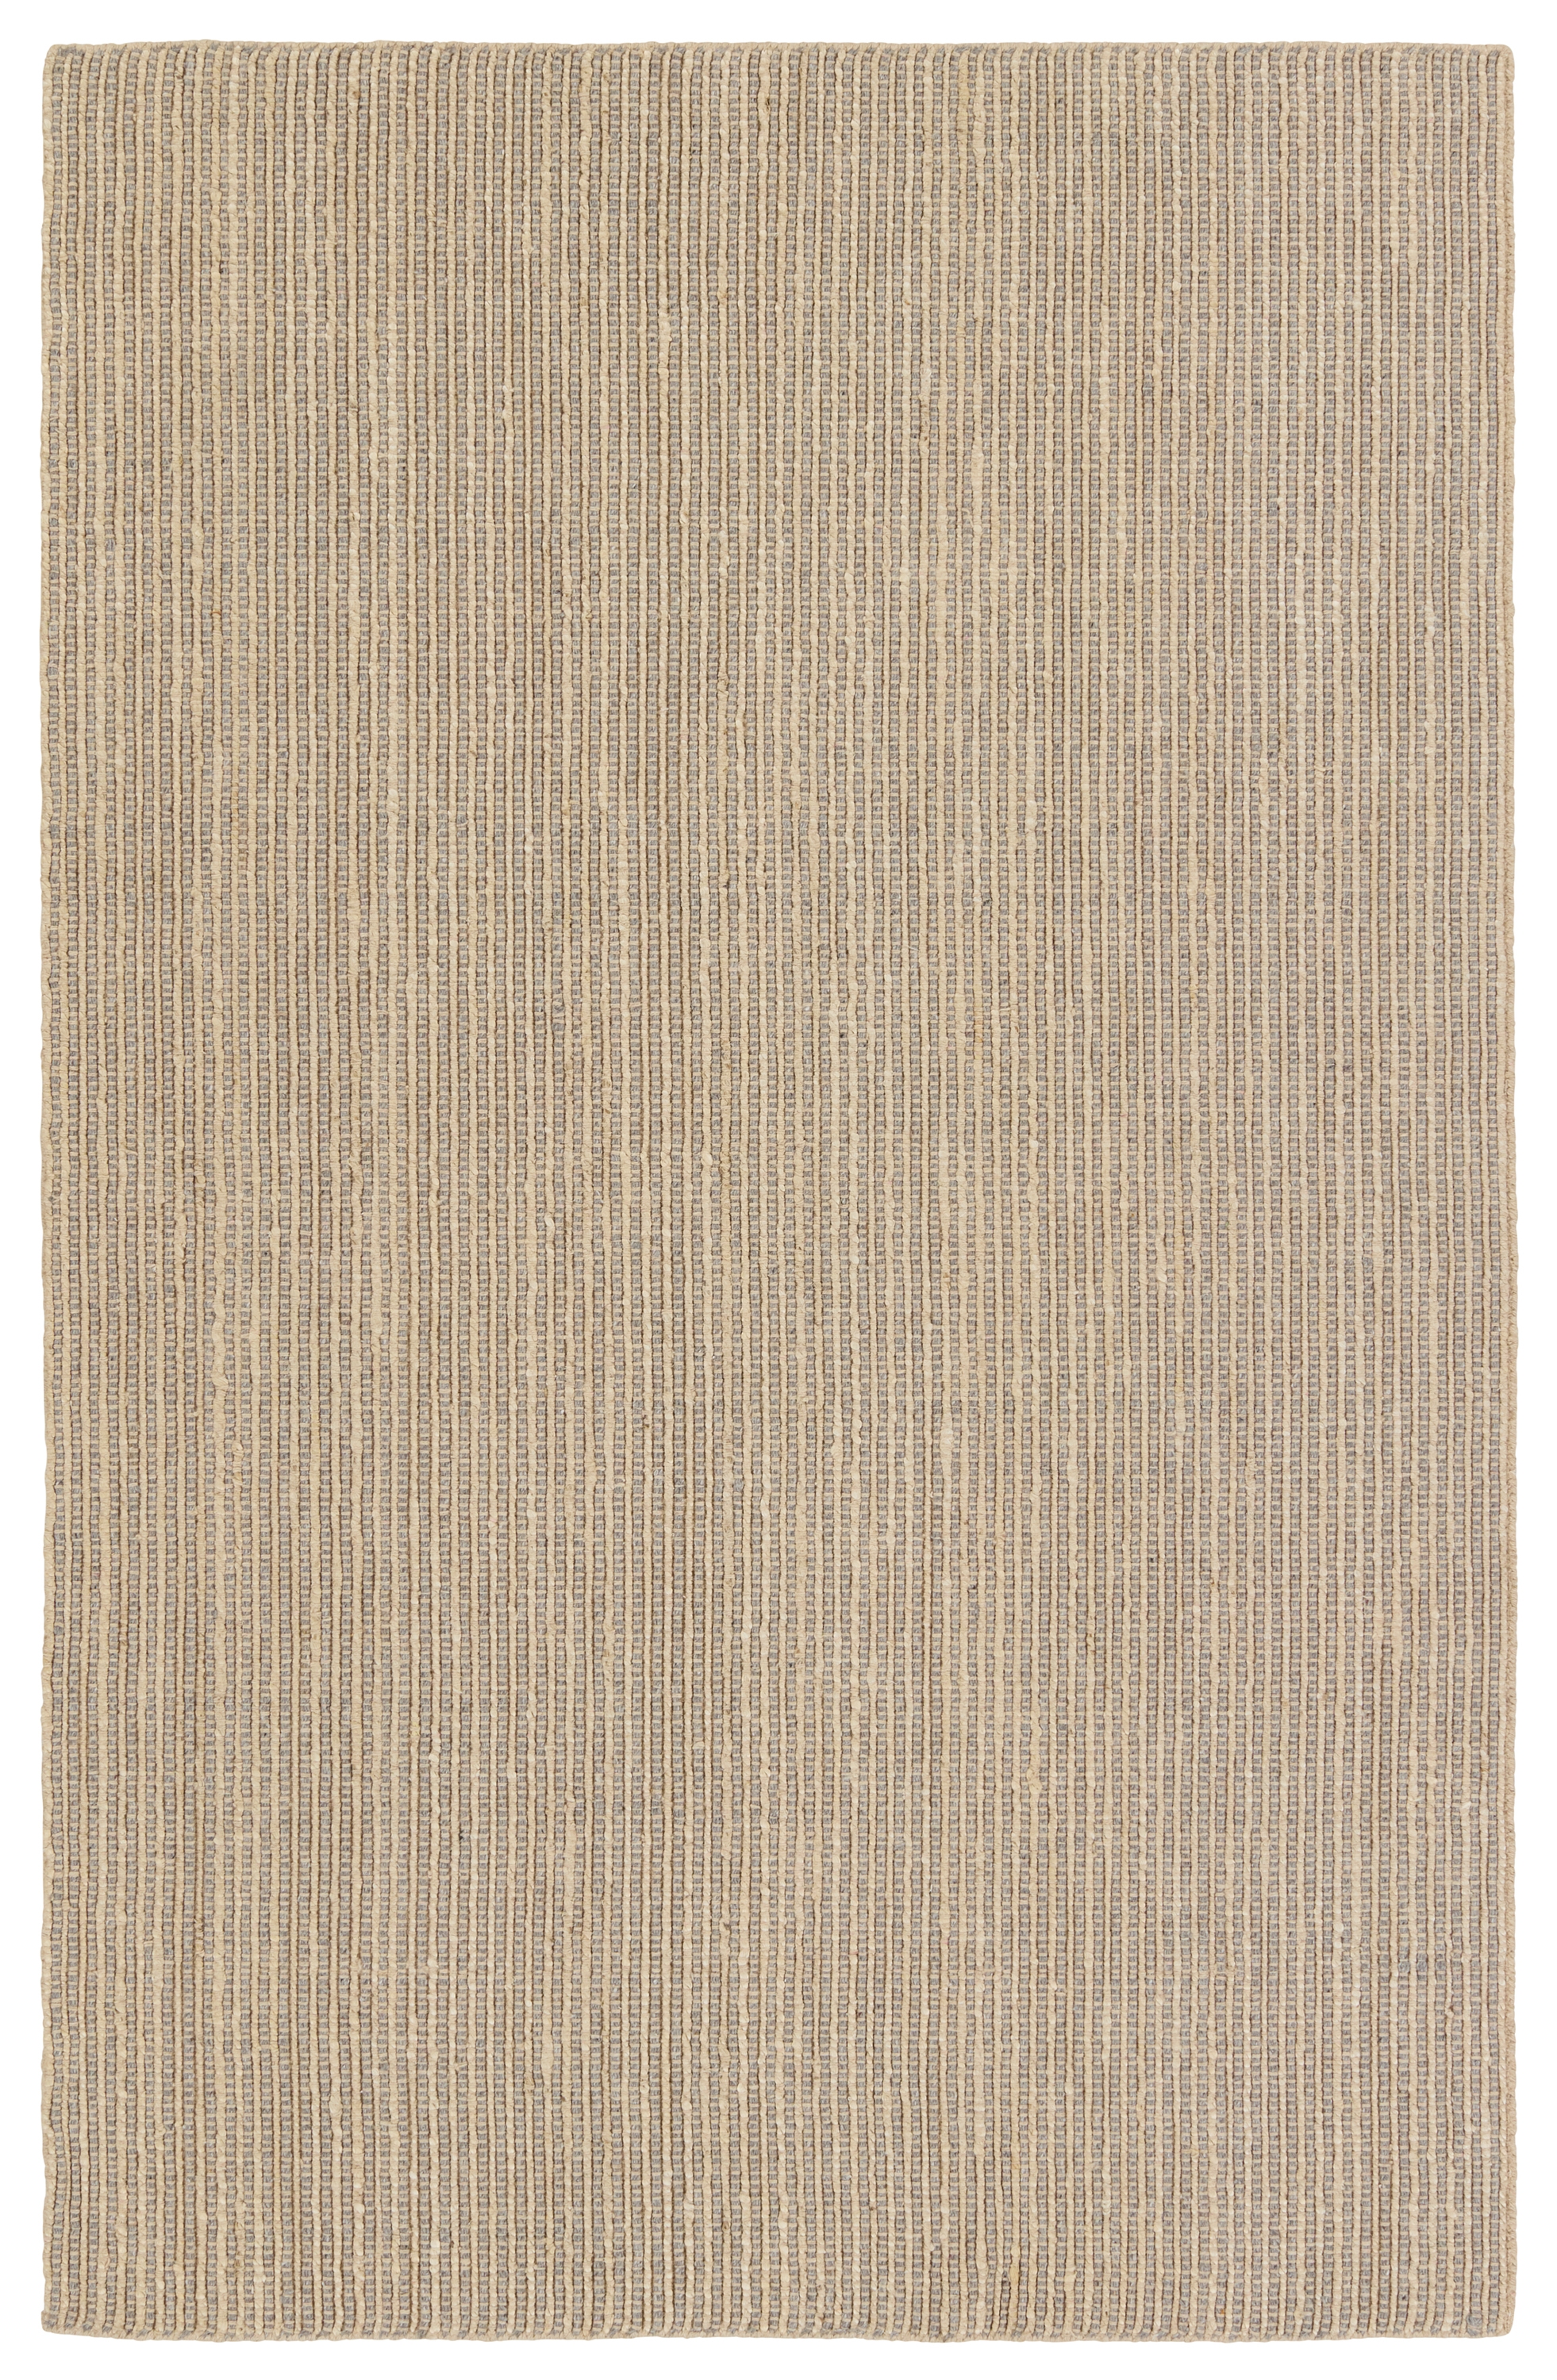 Latona Handmade Striped Gray/ Tan Area Rug (5'X8') - Image 0